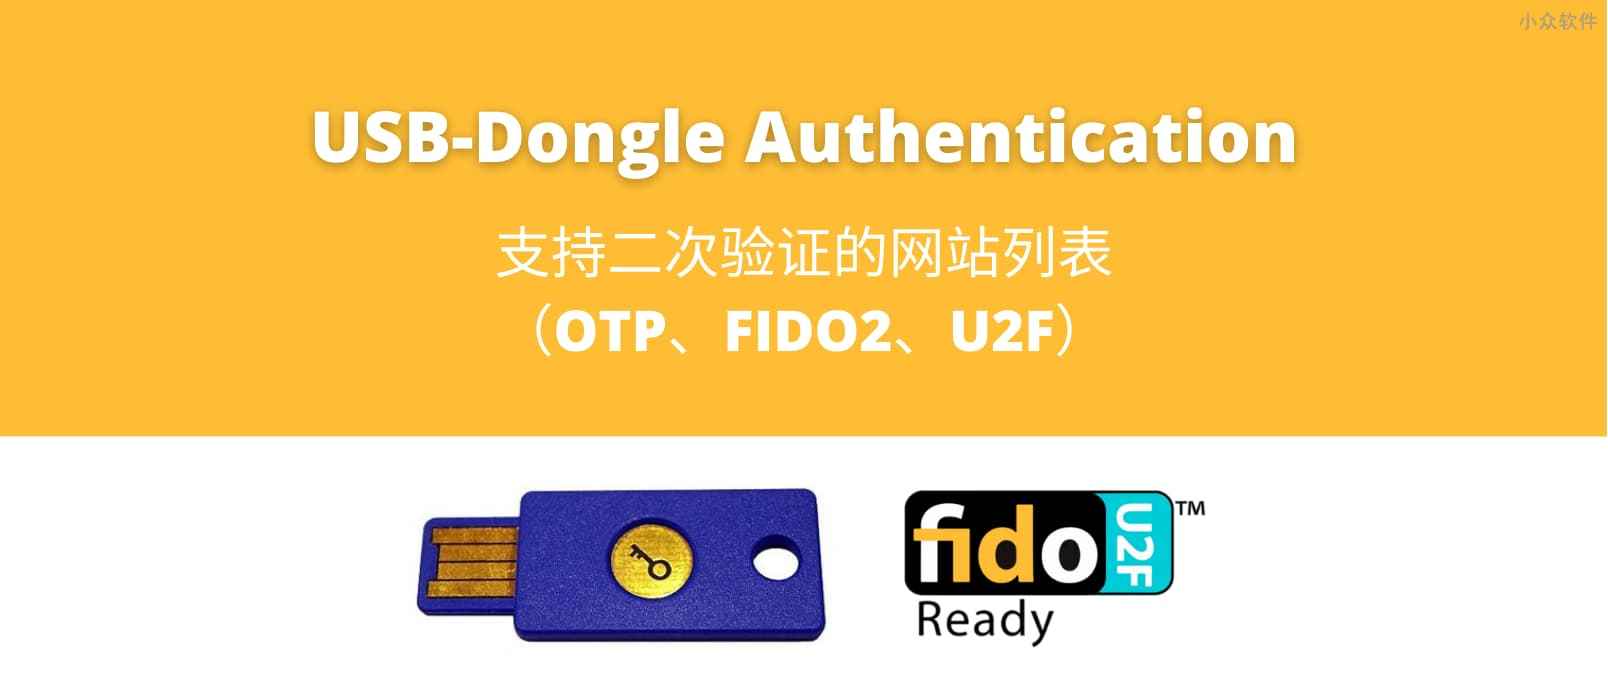 USB-Dongle Authentication - 支持二次验证的网站列表（OTP、FIDO2、U2F）